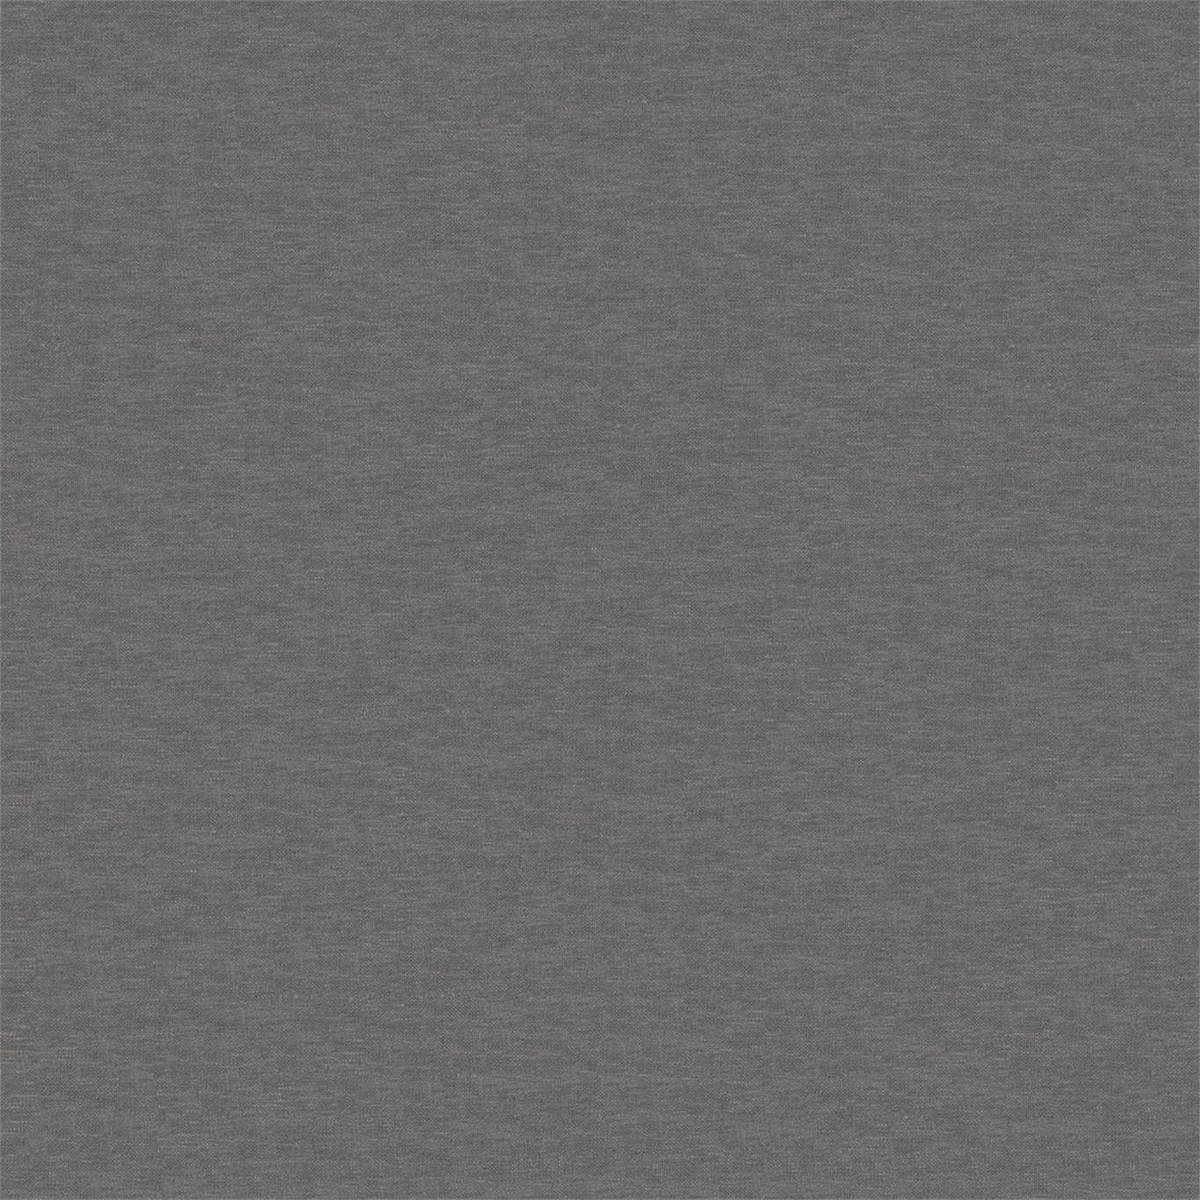 Esala Plains Granite Fabric by Scion